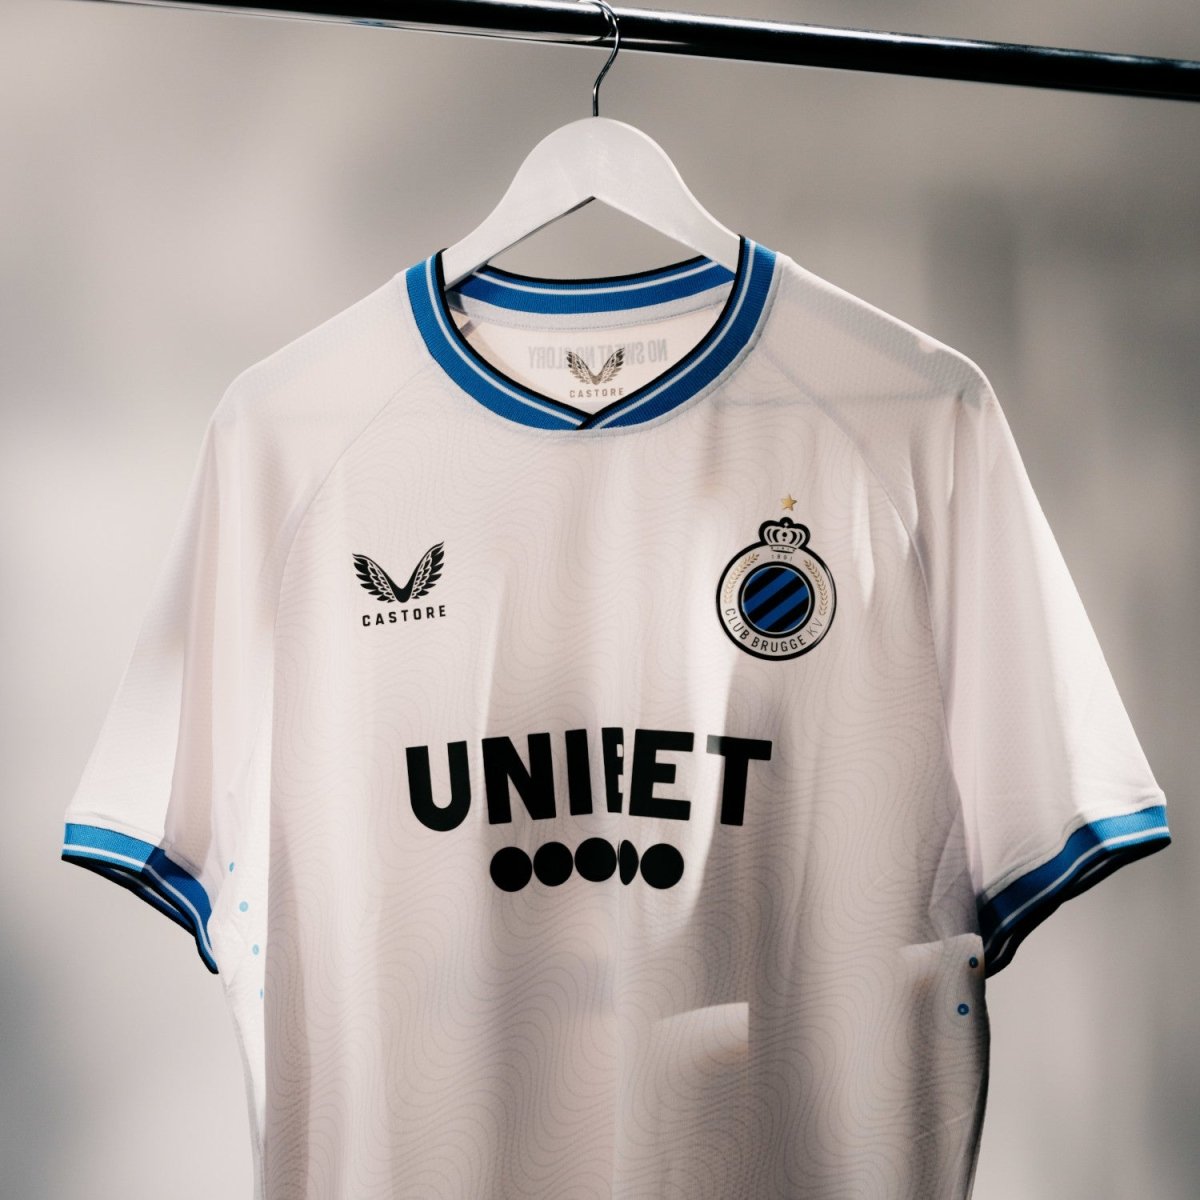 Pro Away Shirt 24/25 - Club Brugge Shop